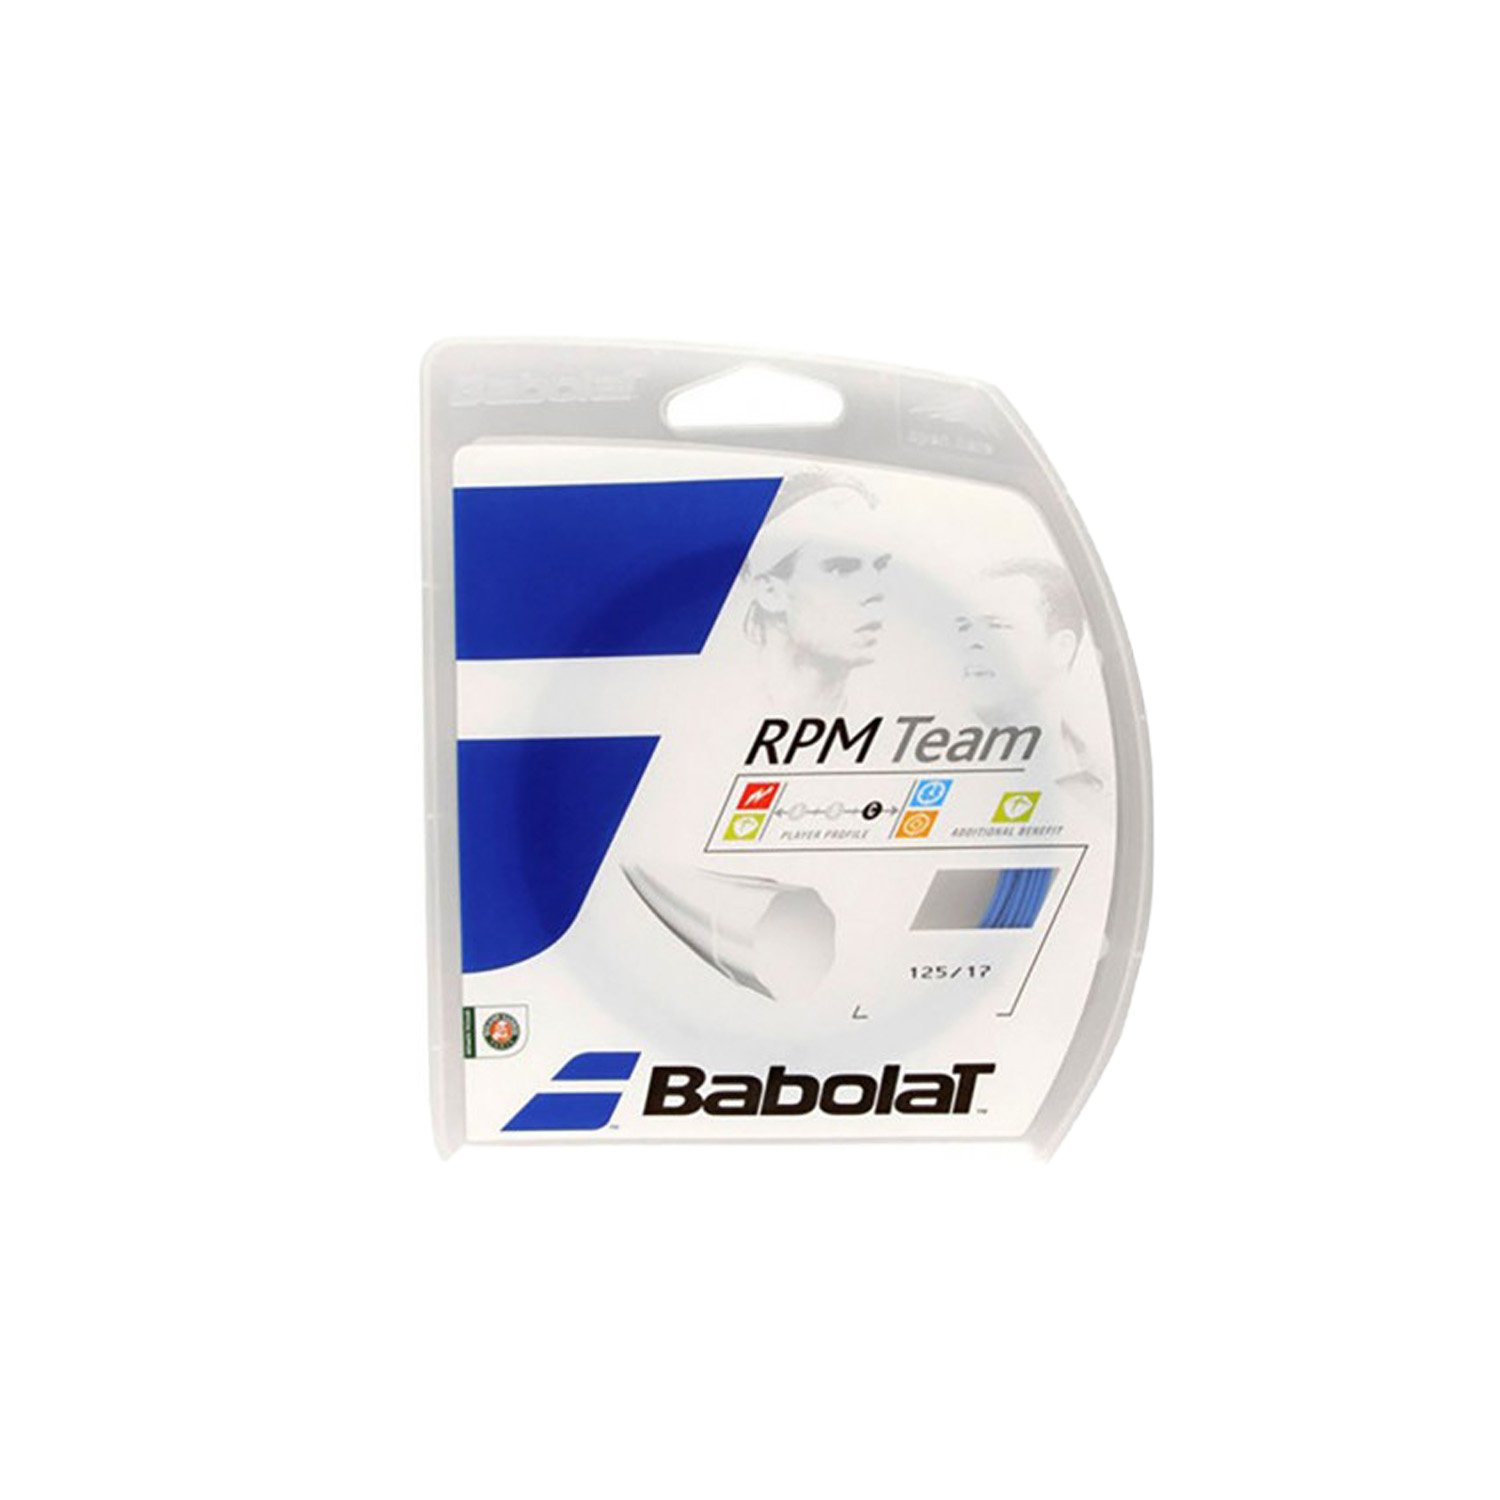 Babolat RPM Team 12M Paket Tenis Raket Kordajı - TURKUAZ - 1